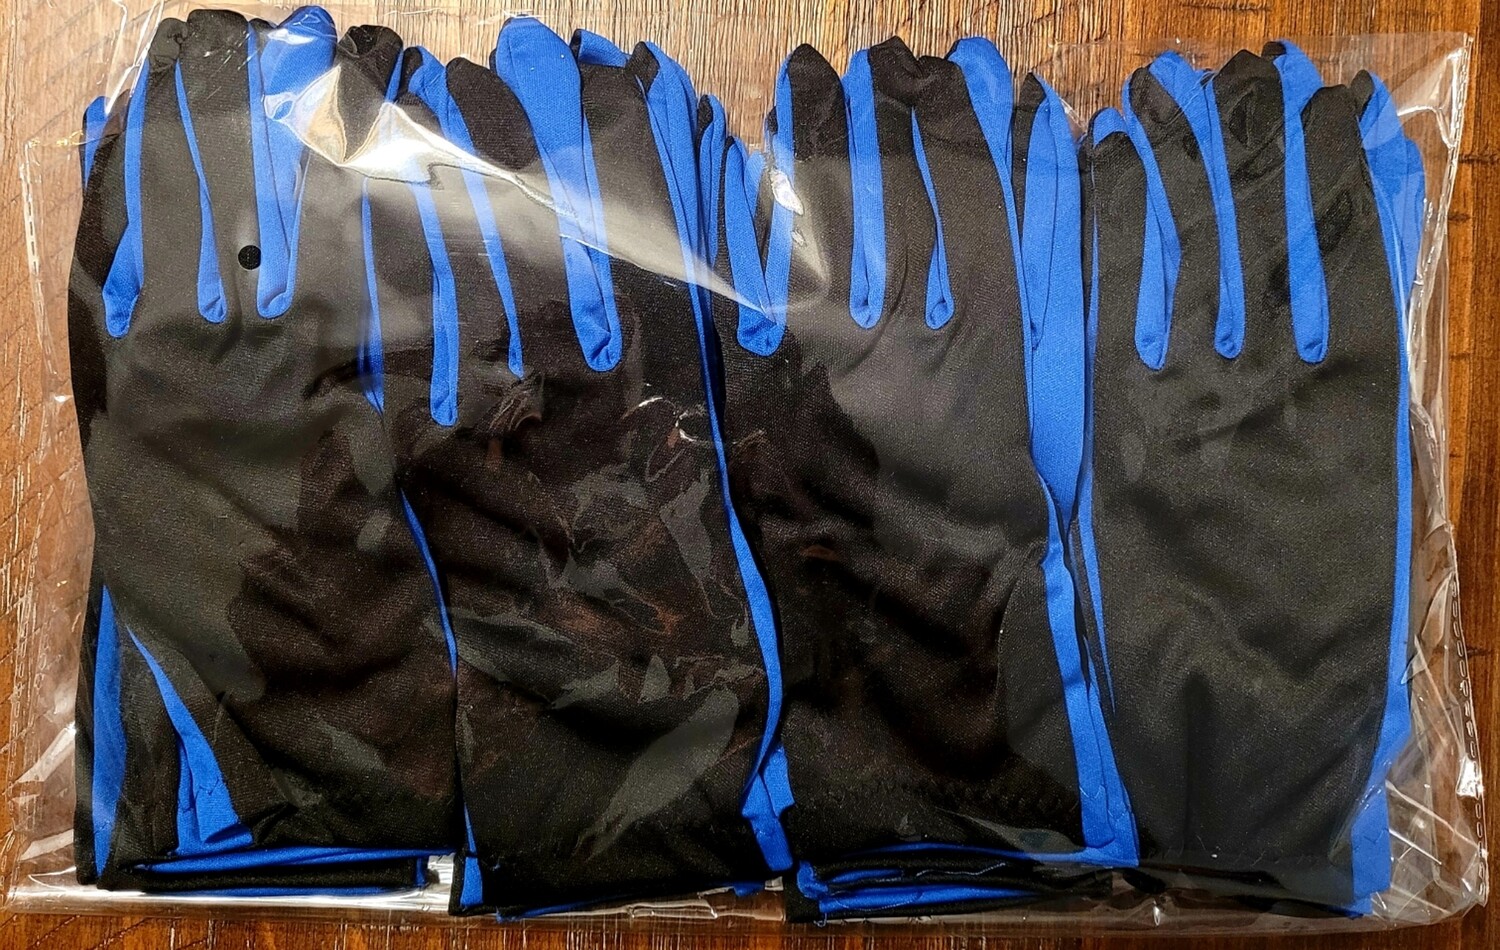 Royal blue and black gloves